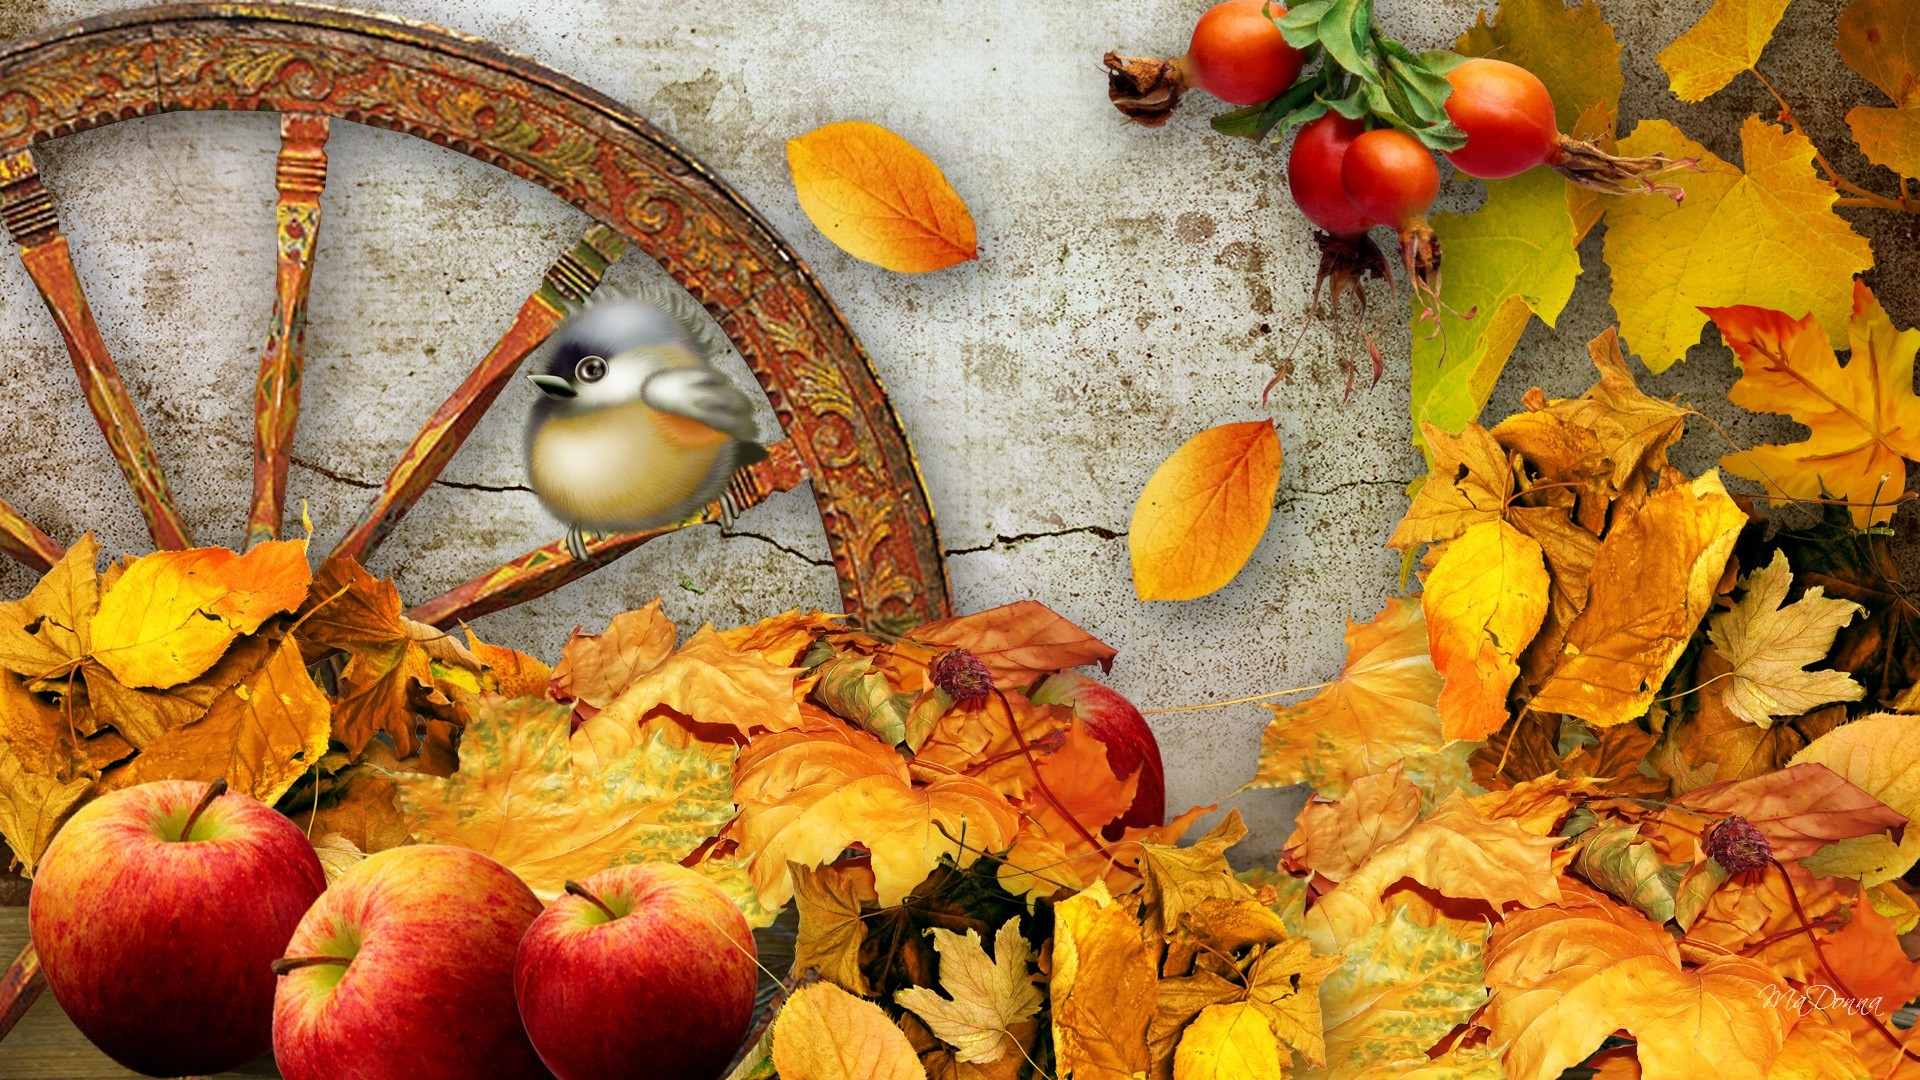 1920x1080 Fall Harvest Wallpaper Downloads 3863 - Amazing Wallpaperz